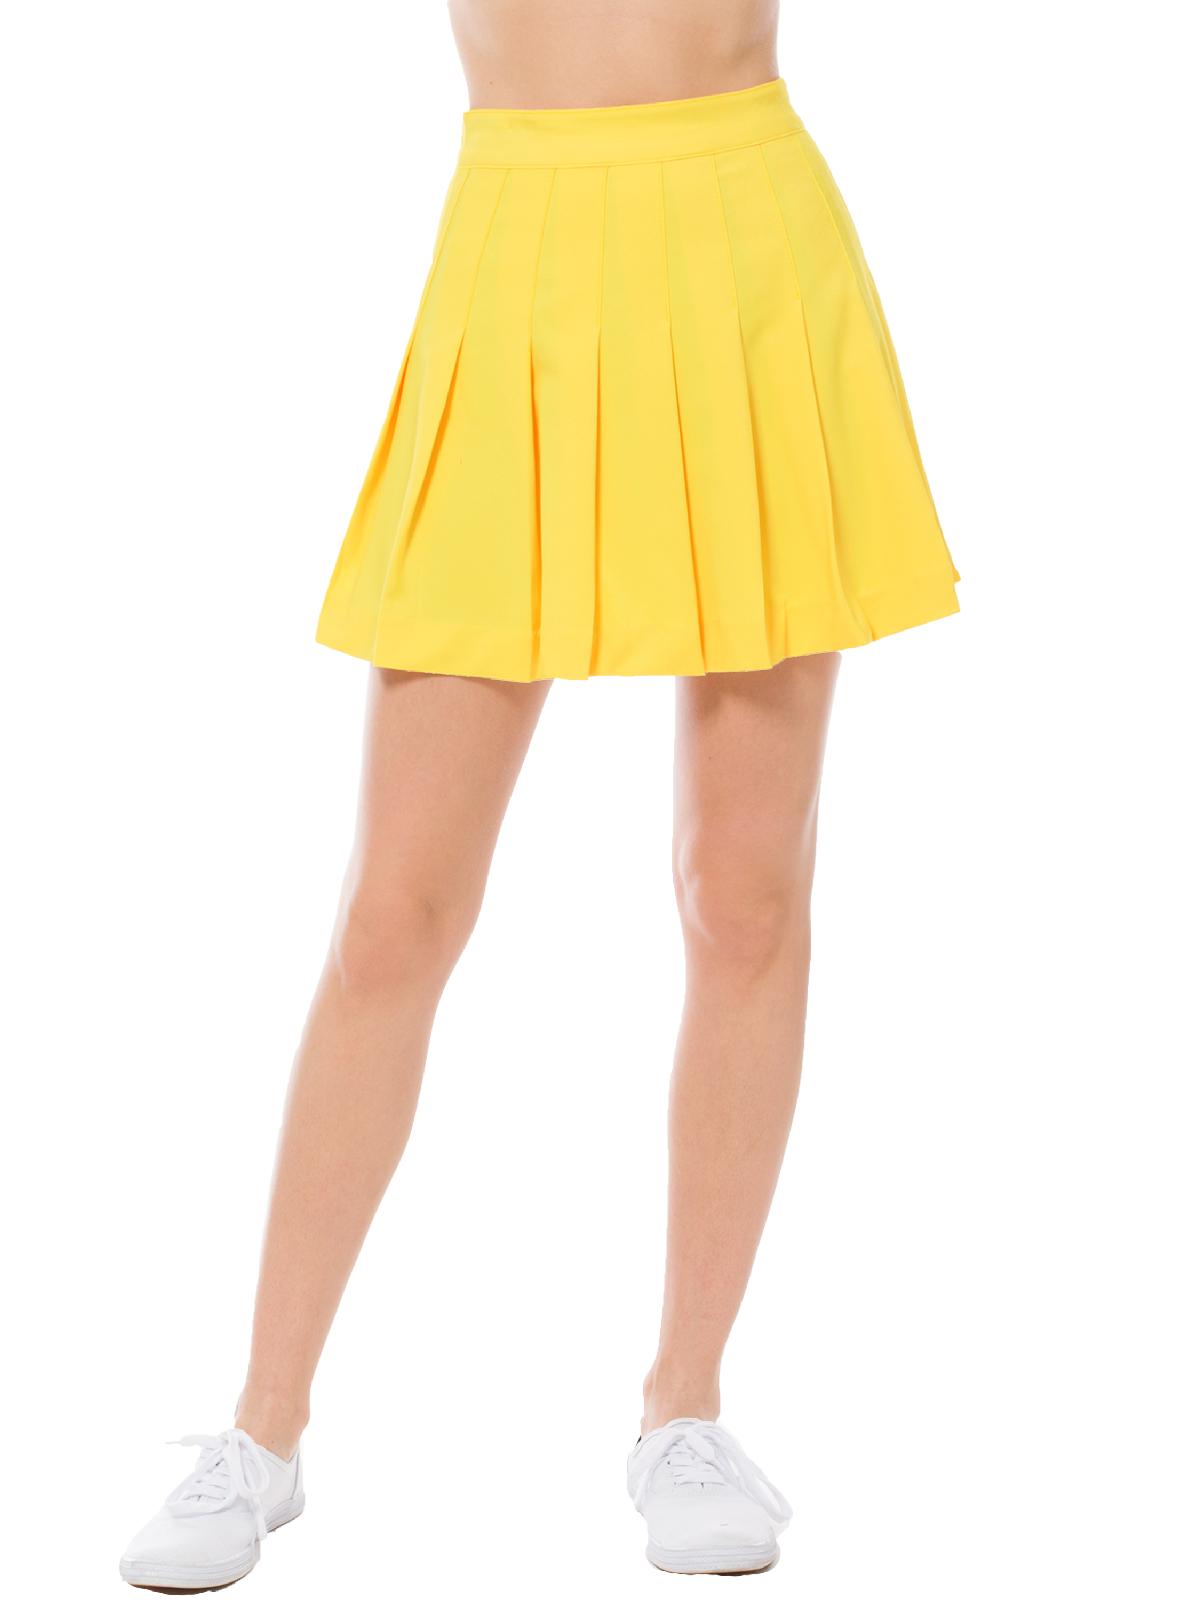 Womens High Waisted Pleated Plain A-line Tennis Mini Skirt with Back Zipper